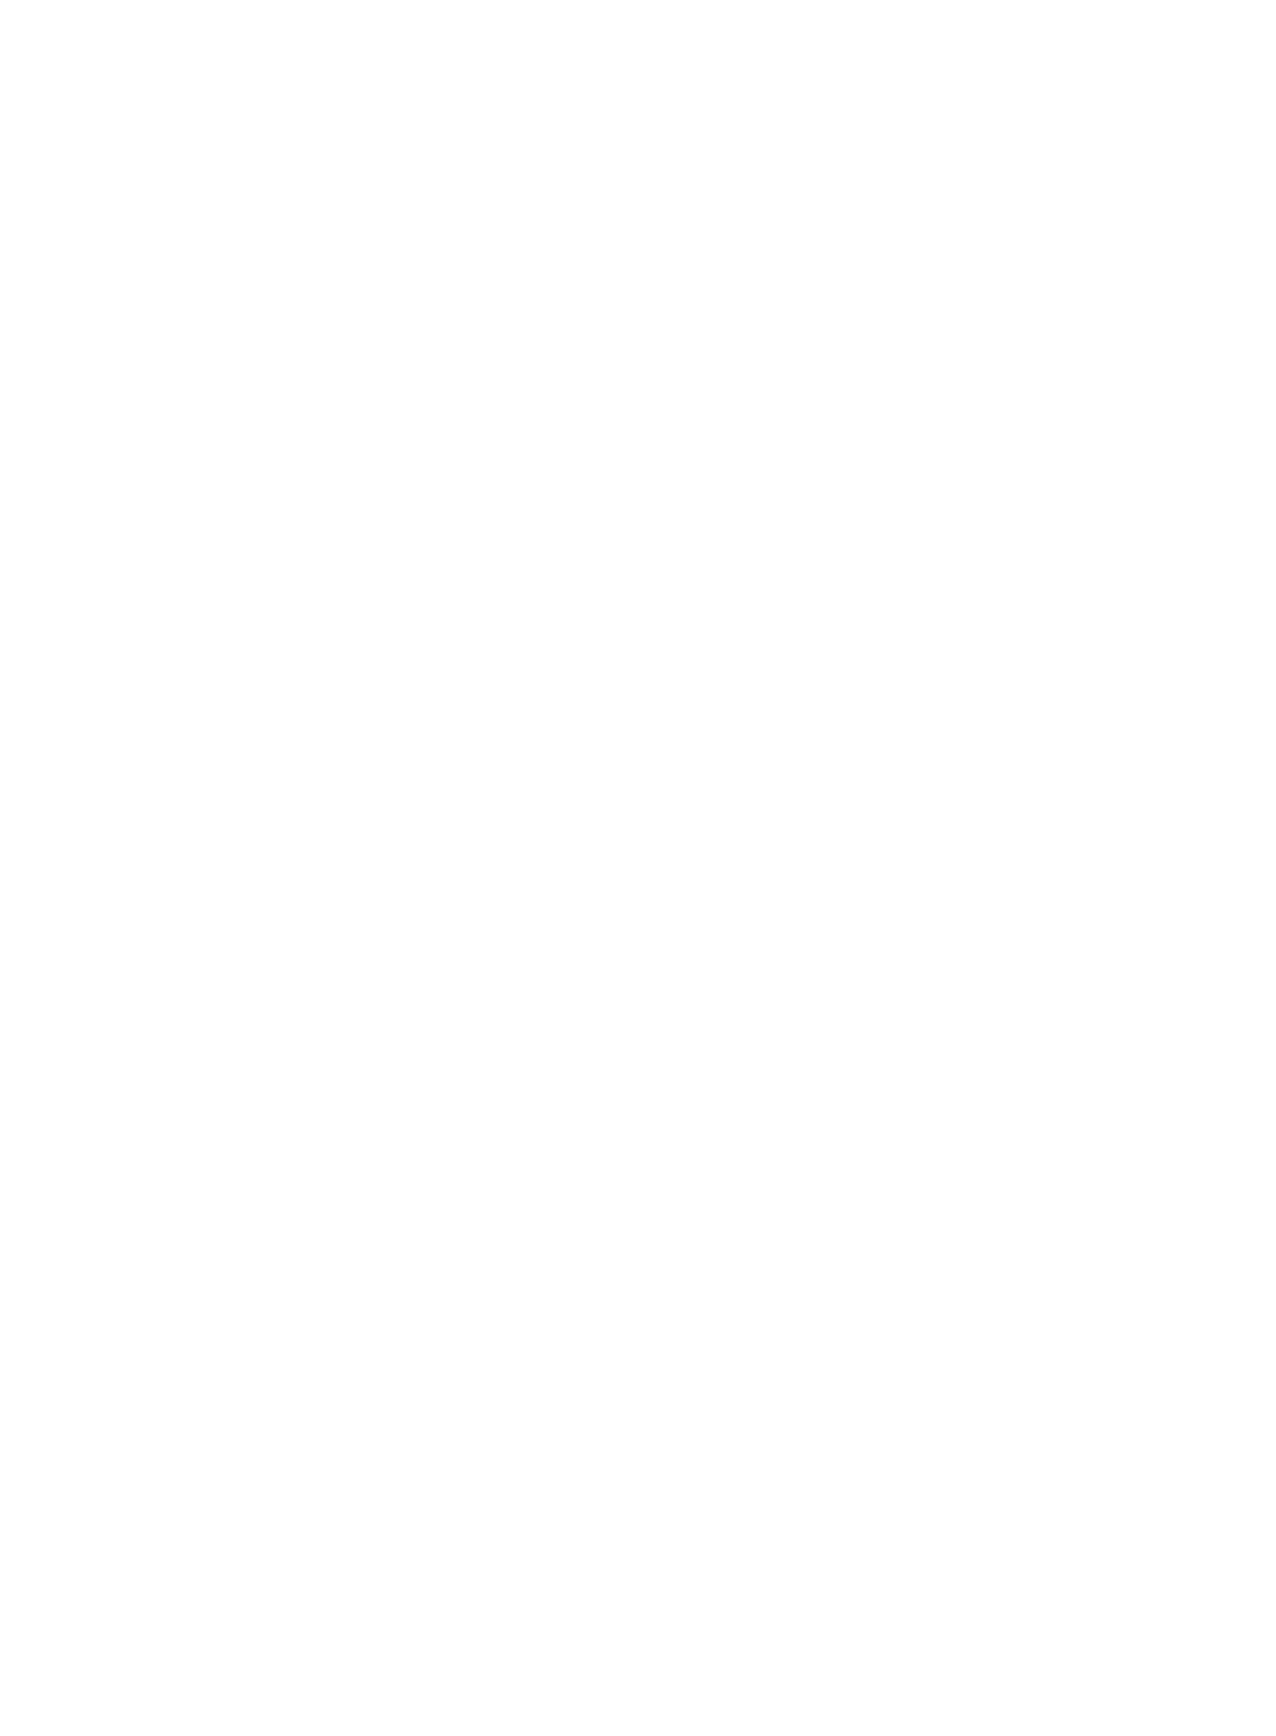 MELD Fitness + Wellness